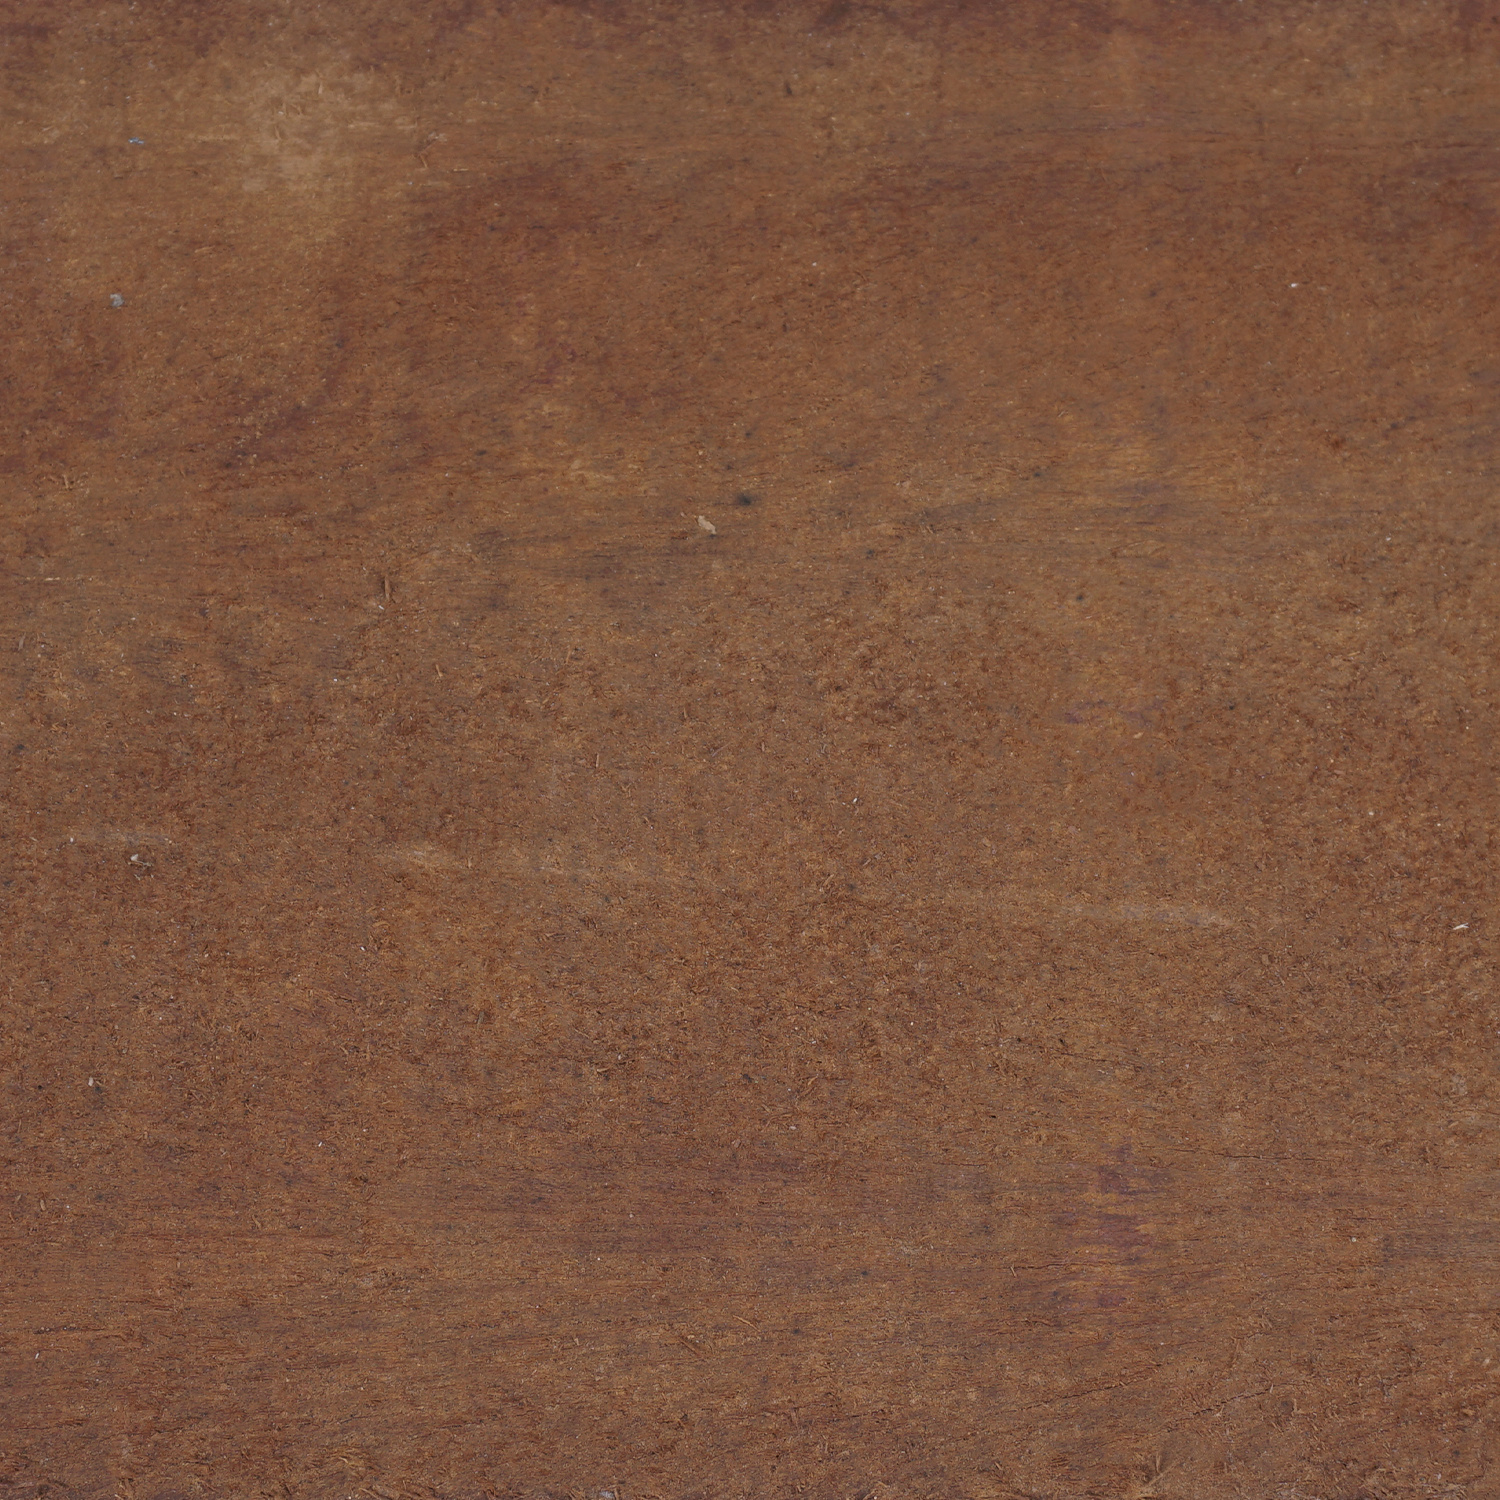  Angelim vermelho balk 50x150mm - ruw (fijnbezaagd) - tropisch hardhout ad (aangedroogd)